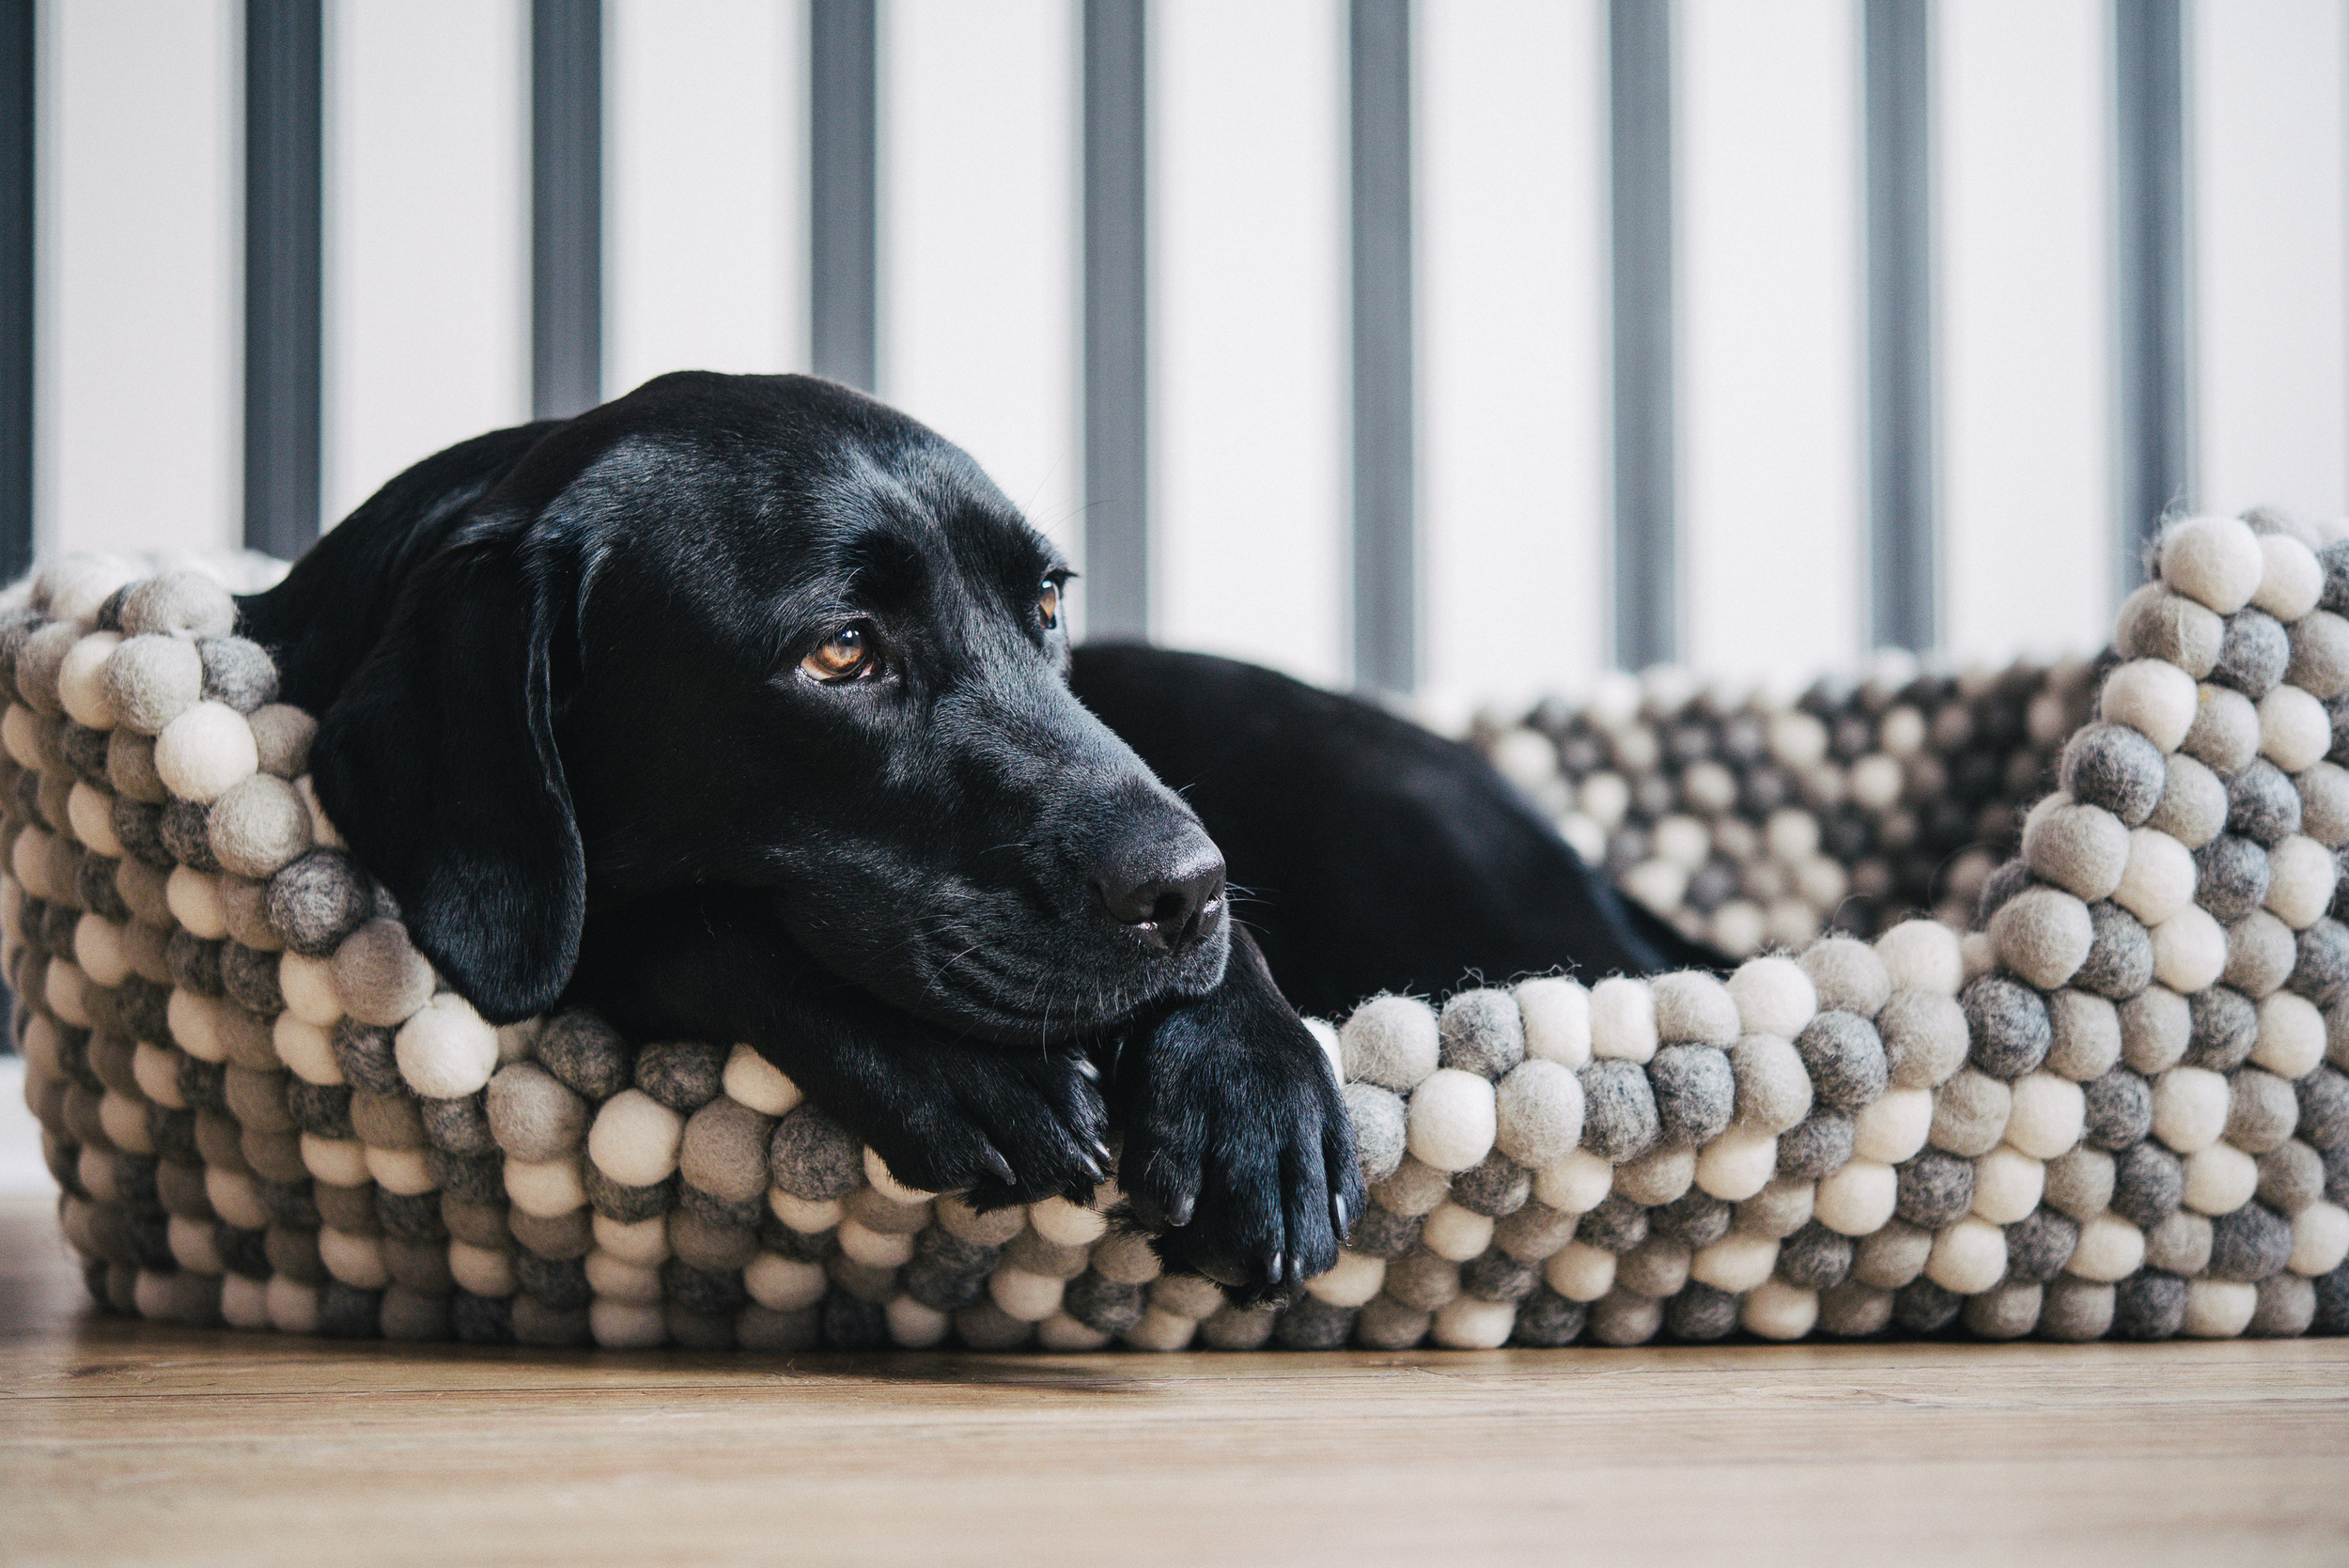 Hundekorb filzkugeln - Die preiswertesten Hundekorb filzkugeln auf einen Blick